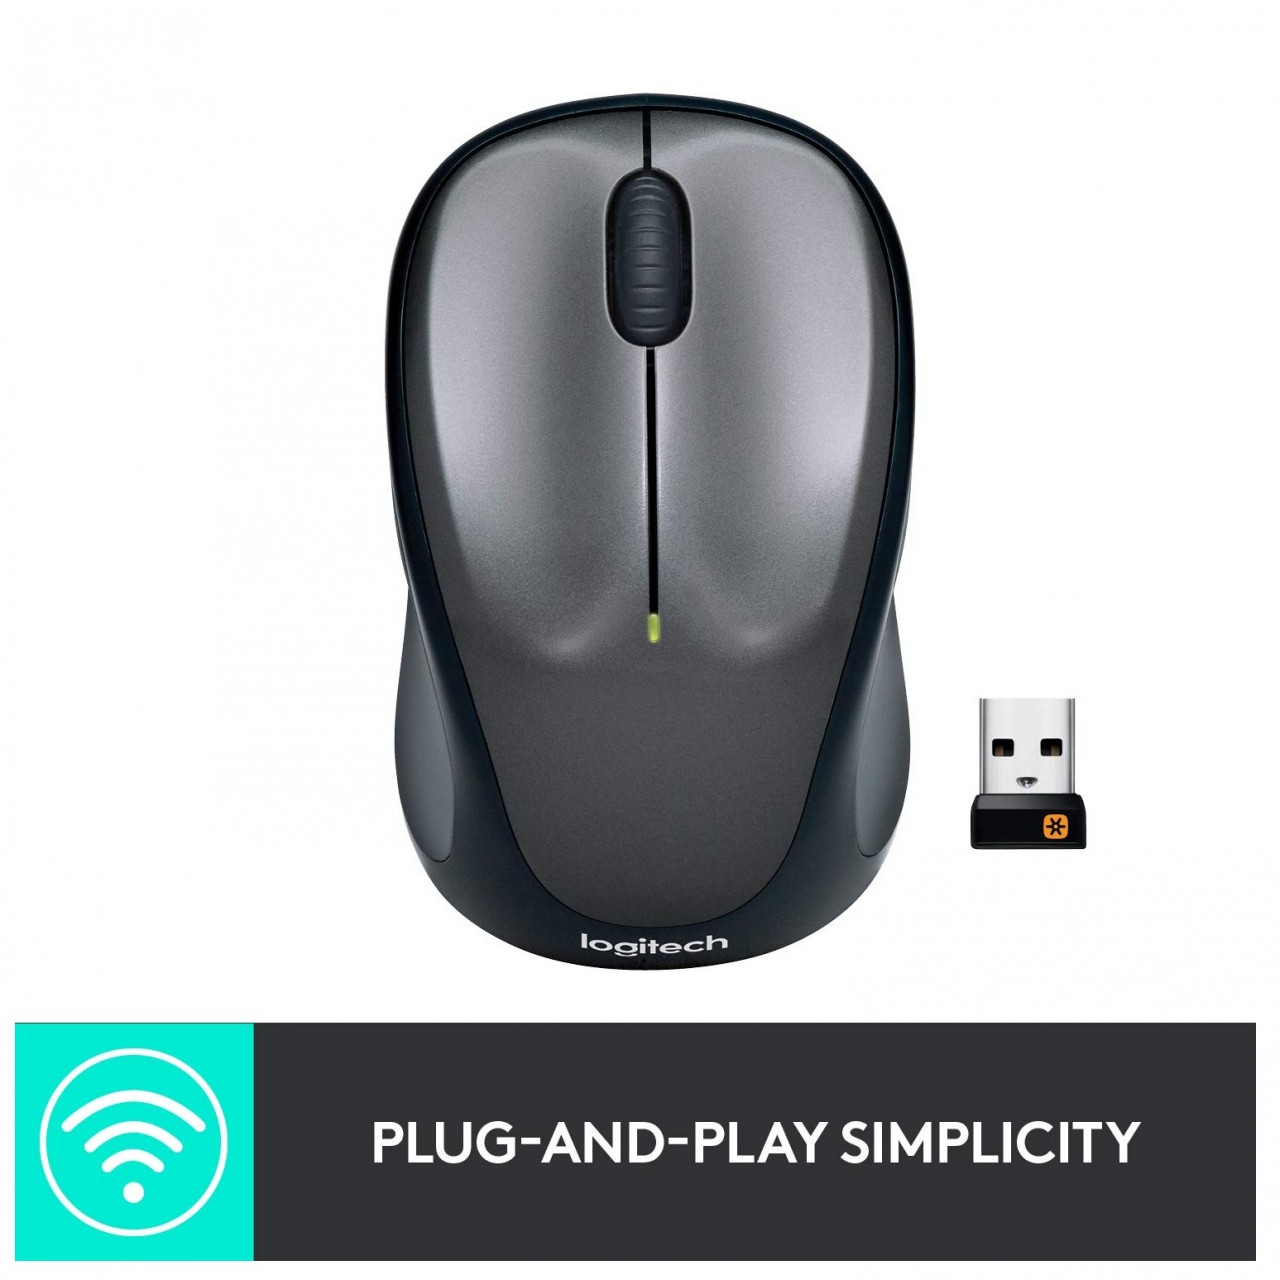 Logitech M235 Wireless Mouse For Mac & Windows - Black( Original)